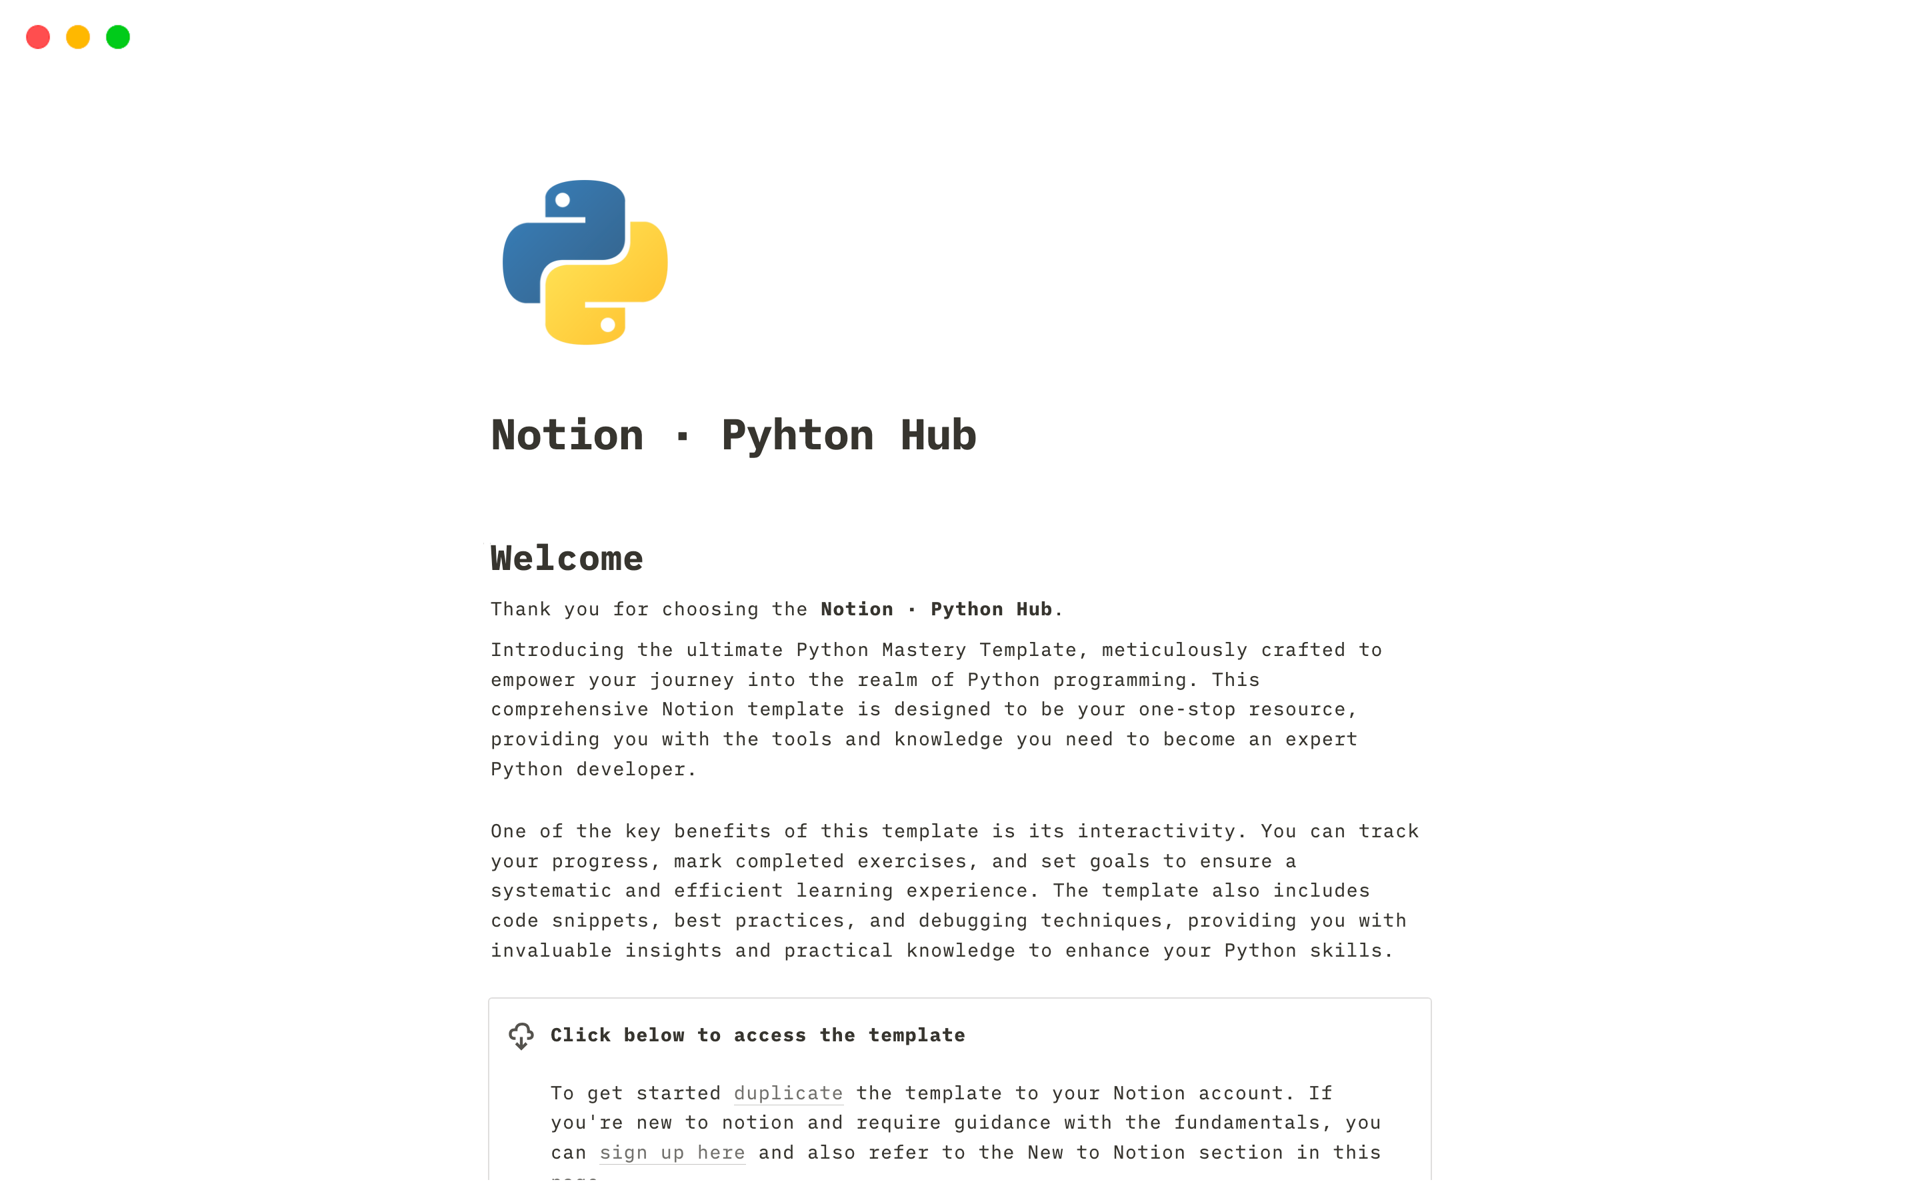 A template preview for Notion · Pyhton Hub